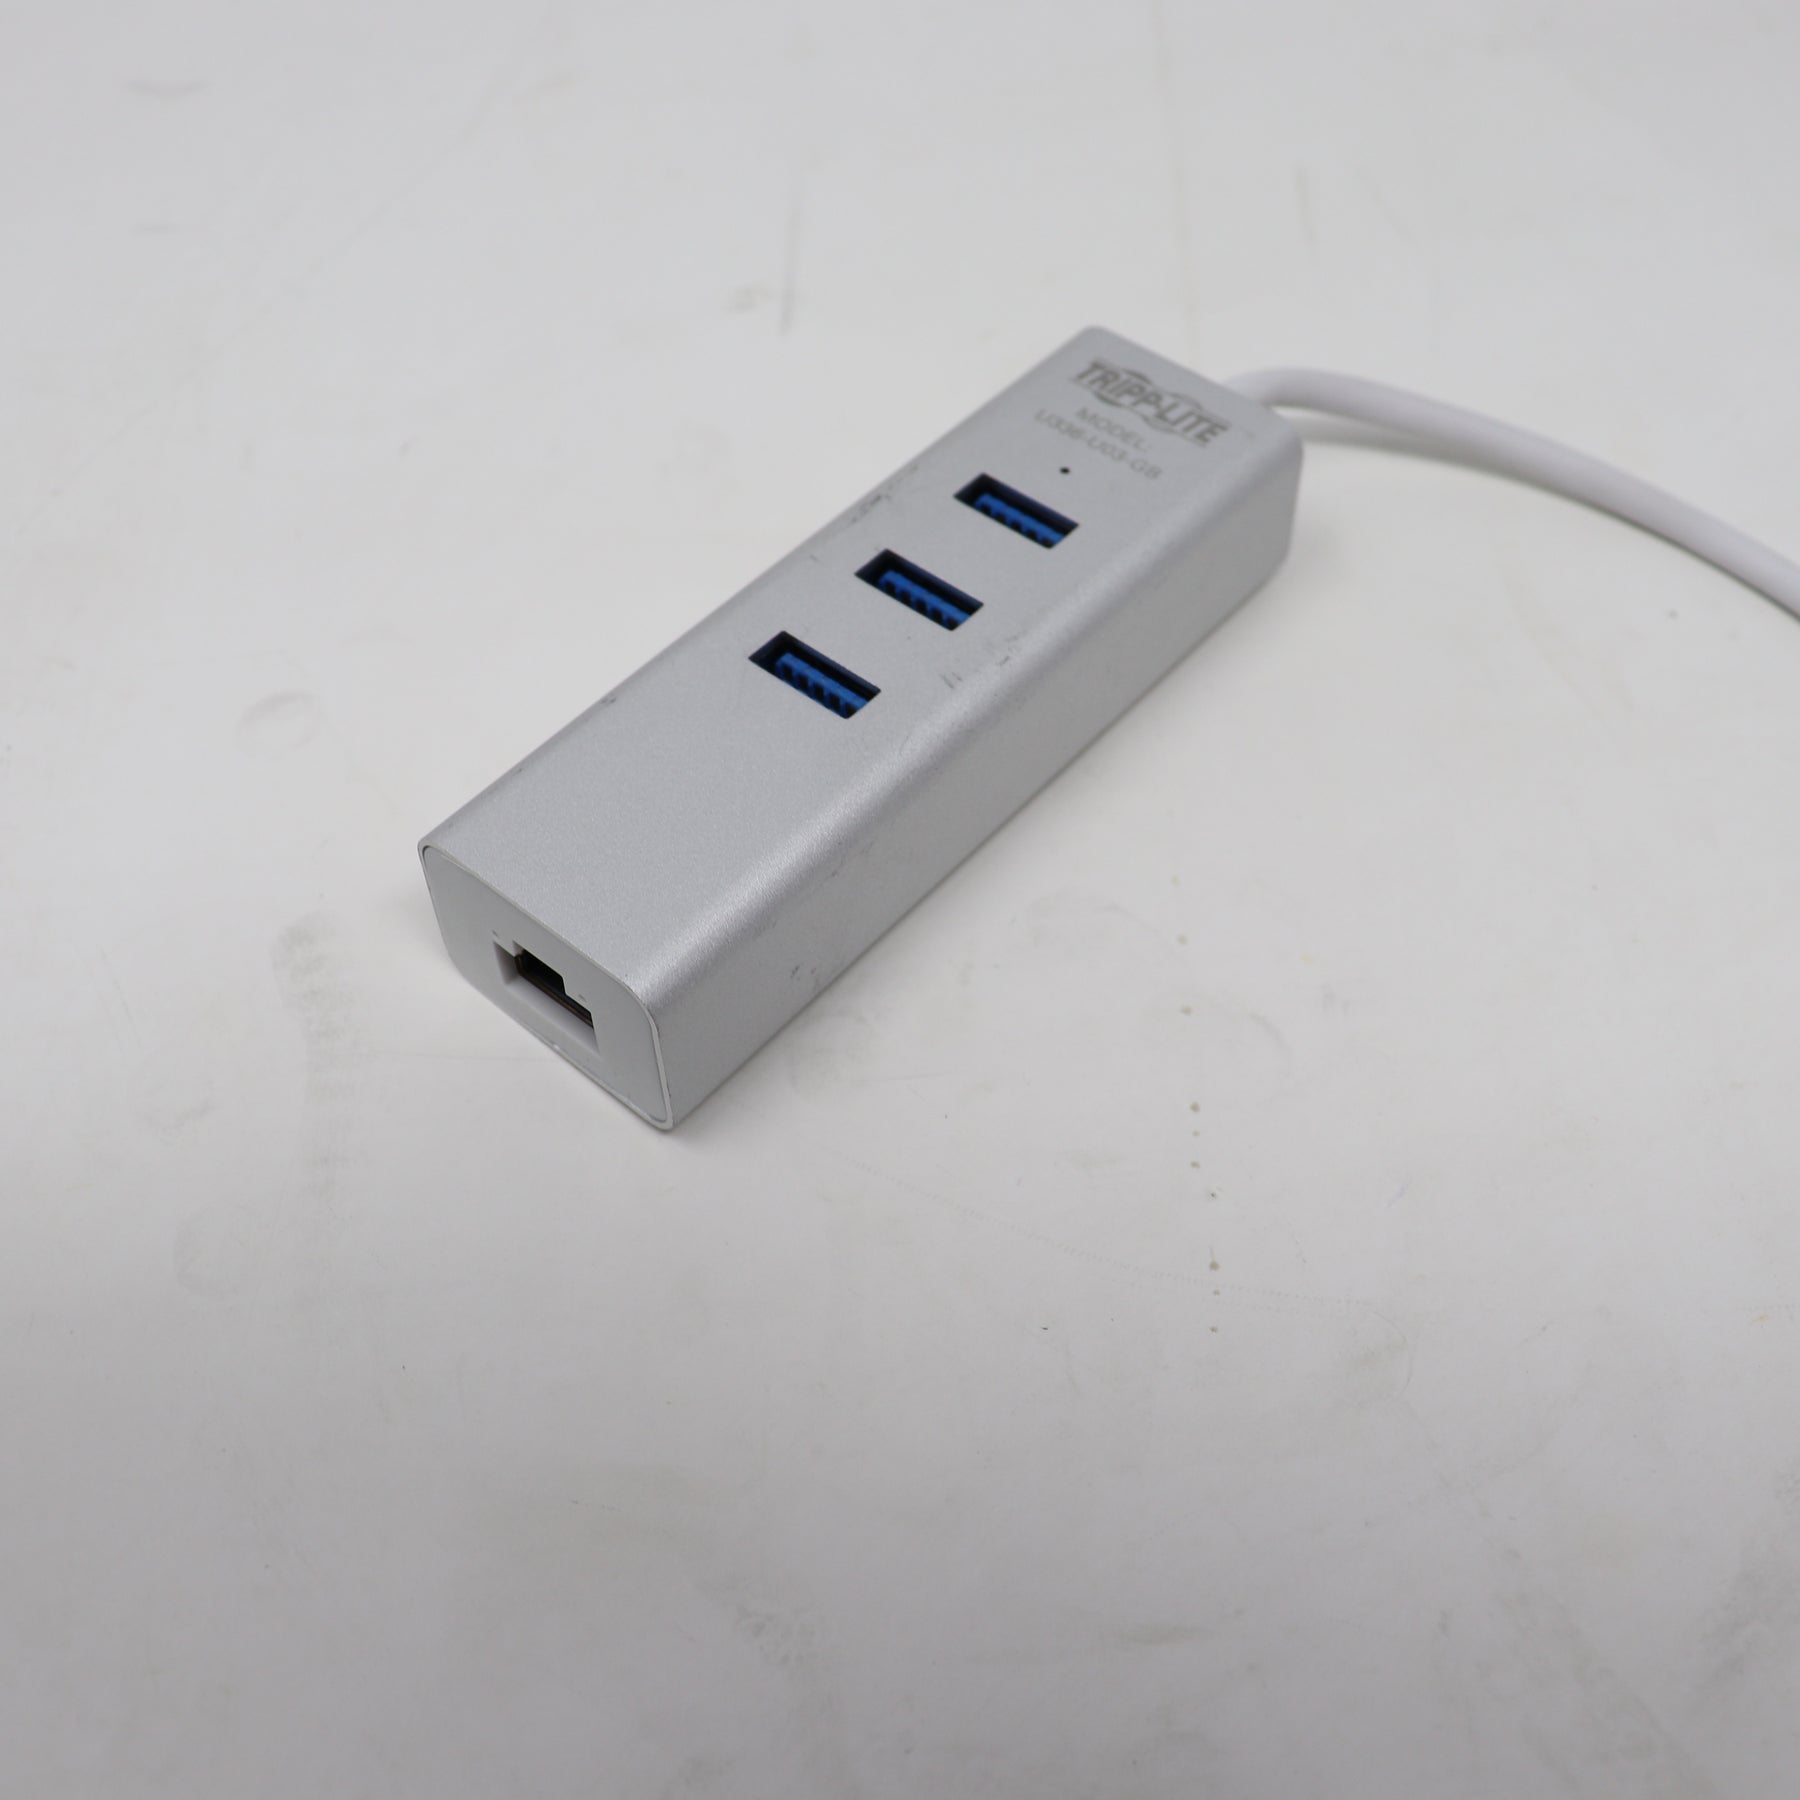 Tripp Lite 3 Port USB 3.0 to Gigabit Ethernet NIC Network Adapter U336-U03-GB